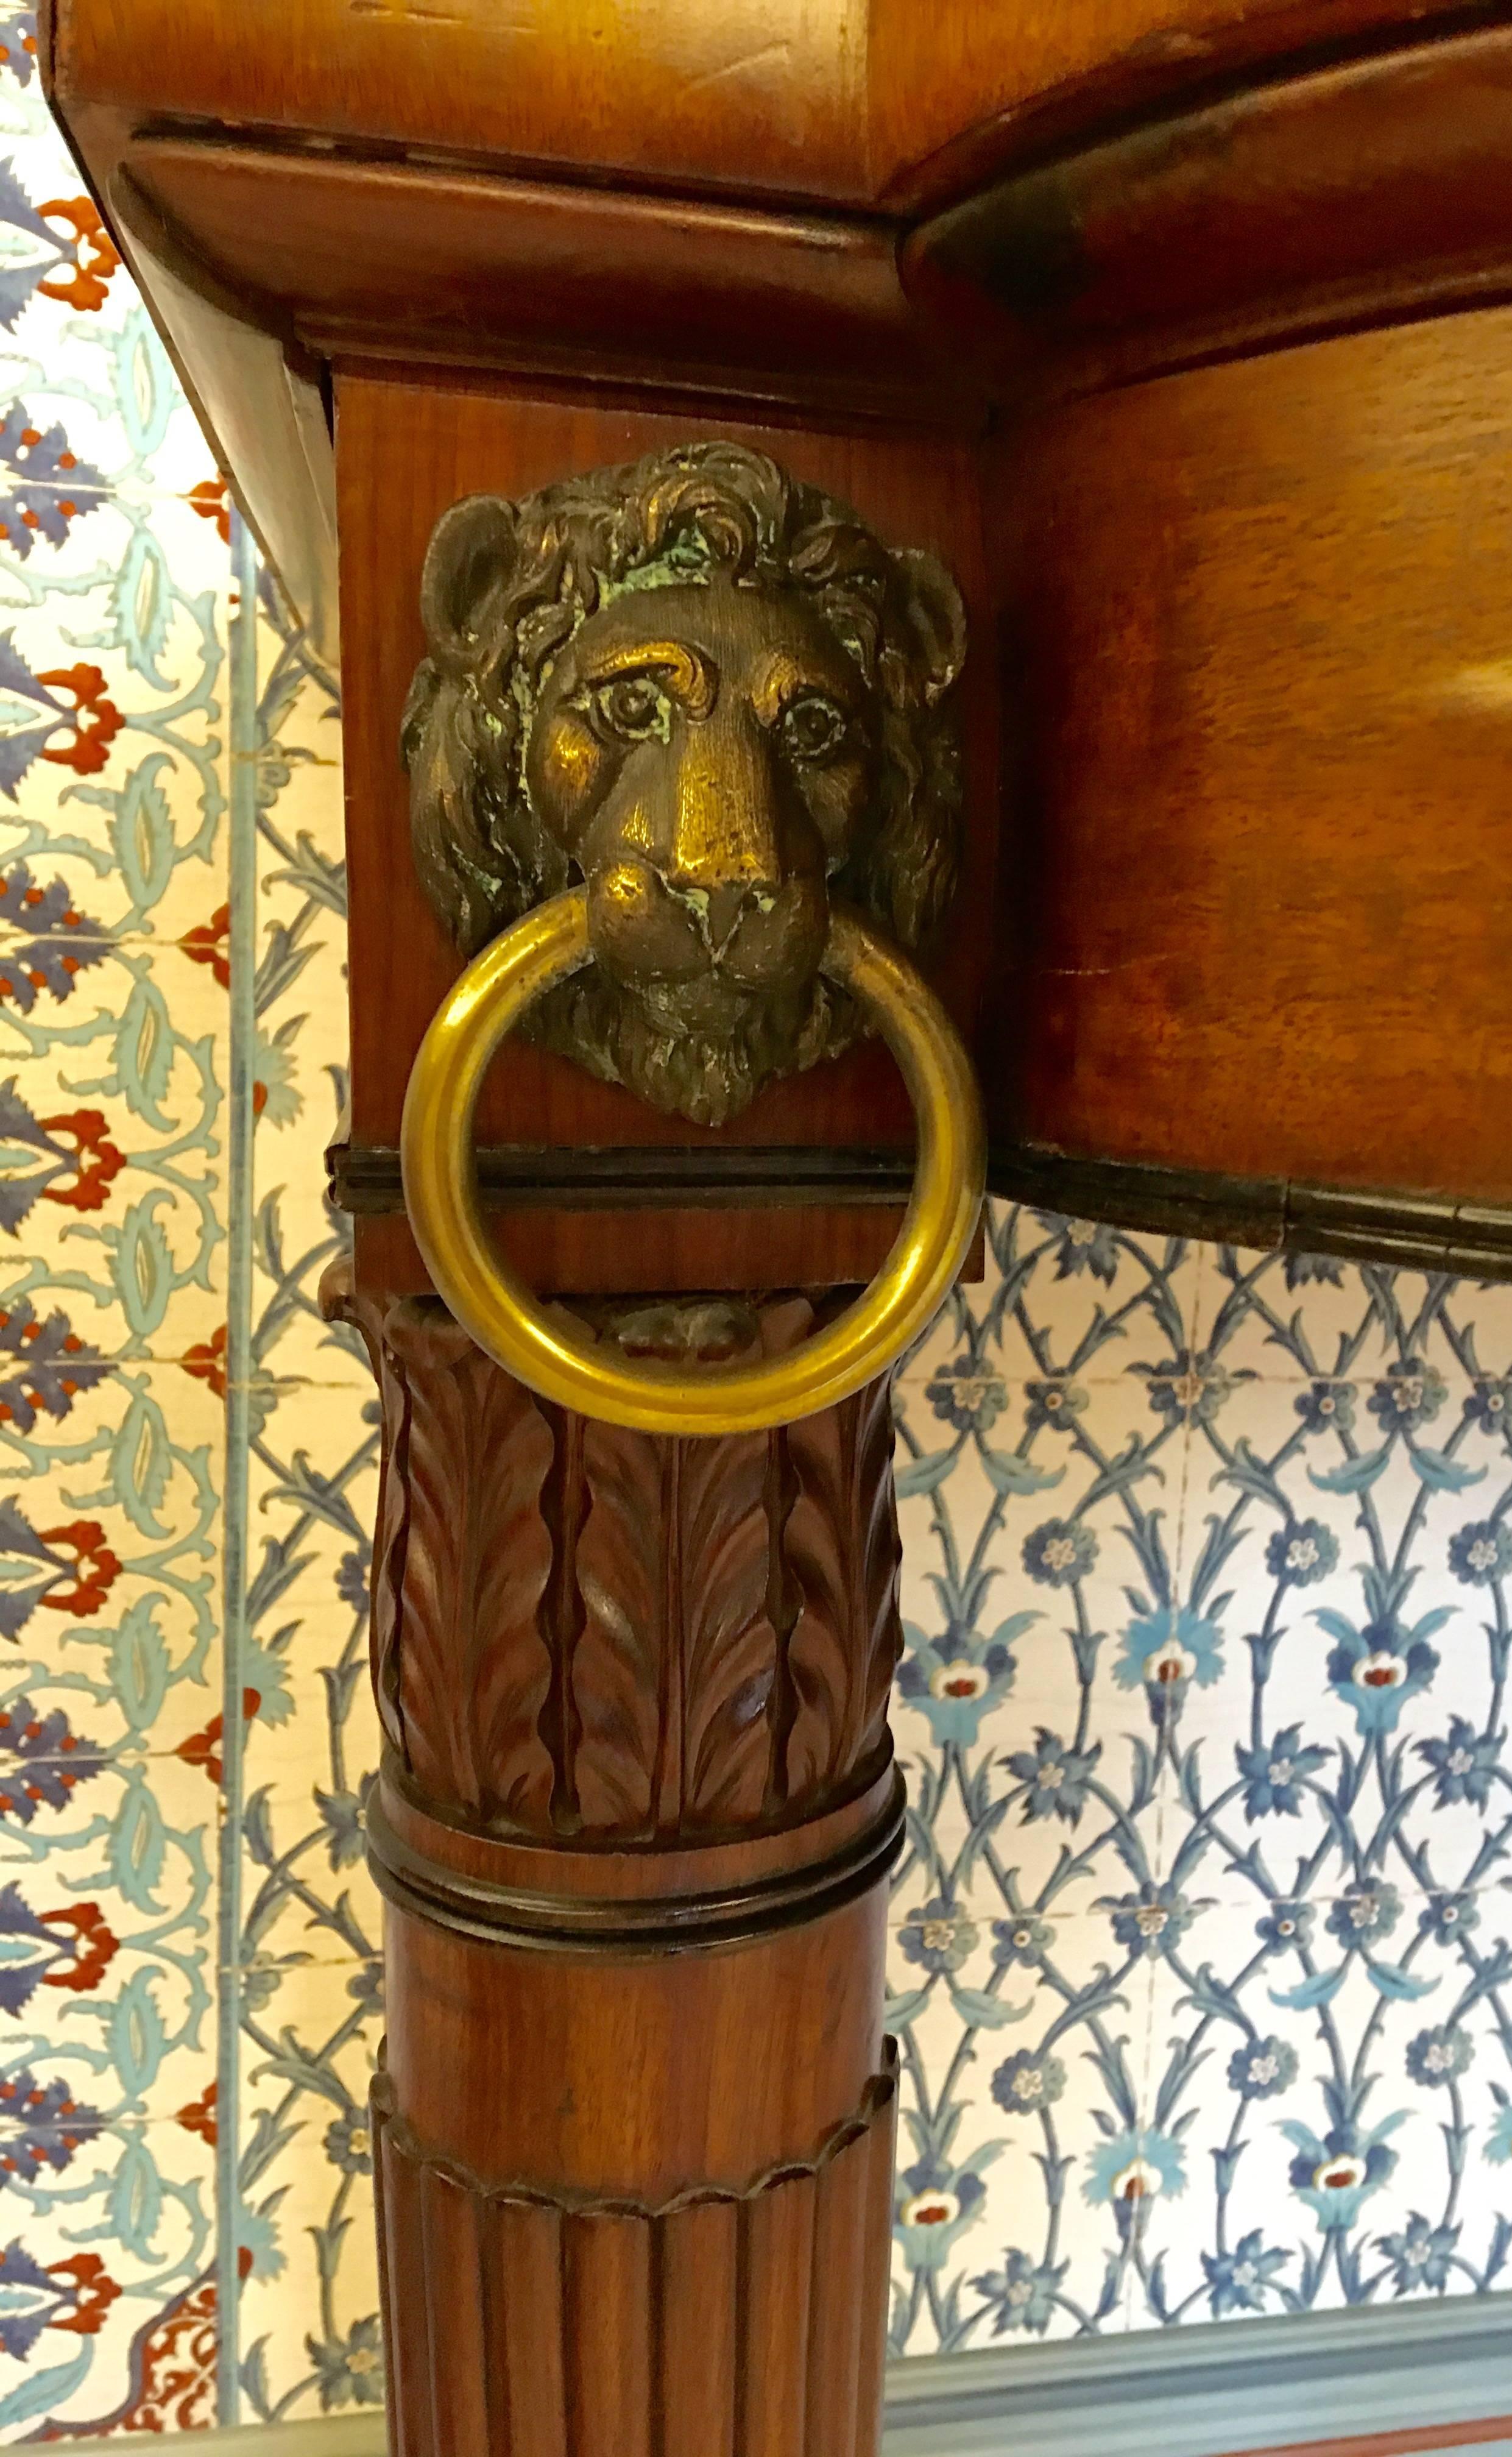 19th century English late Regency mahogany server with lion heads brass mounts.